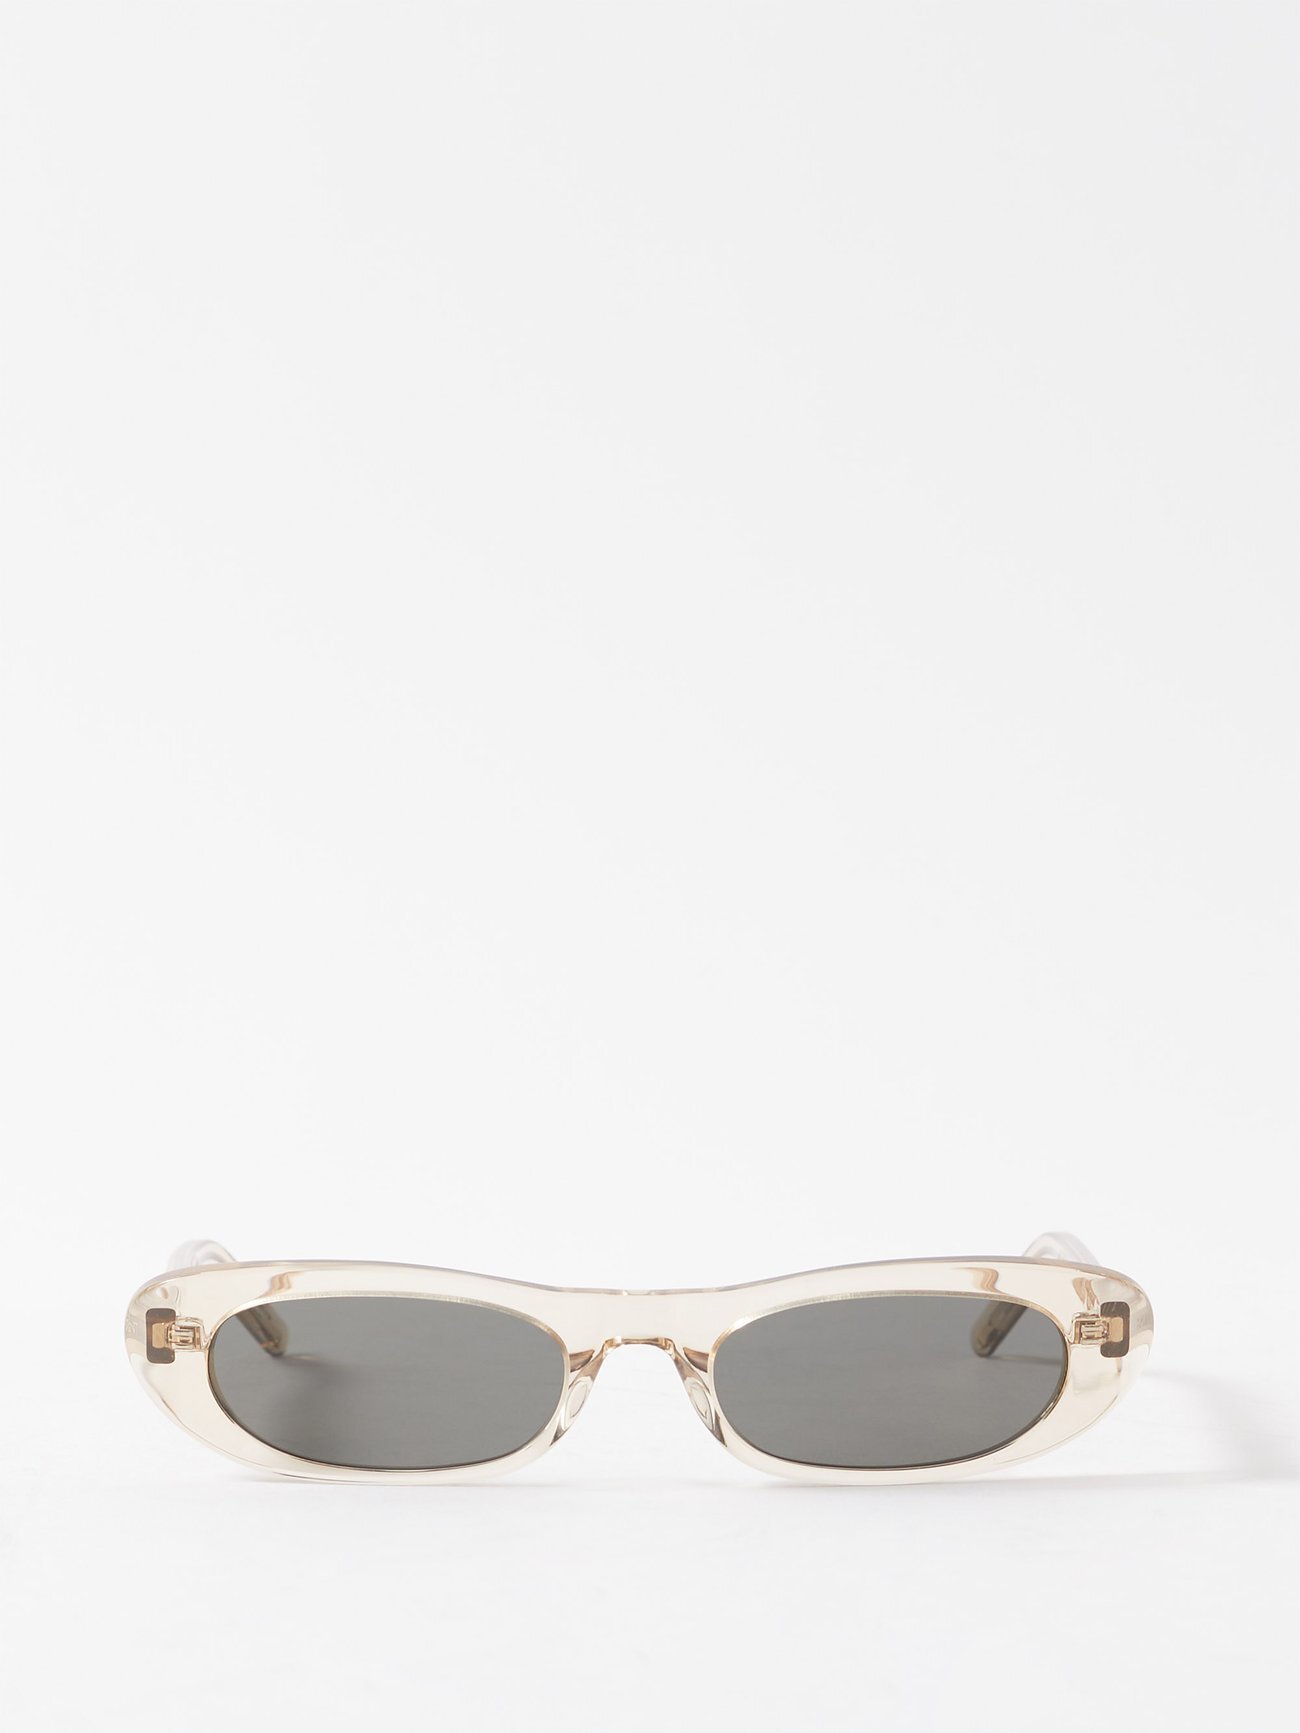 Saint Laurent Eyewear - Cat-eye Acetate Sunglasses - Womens - Nude Multi